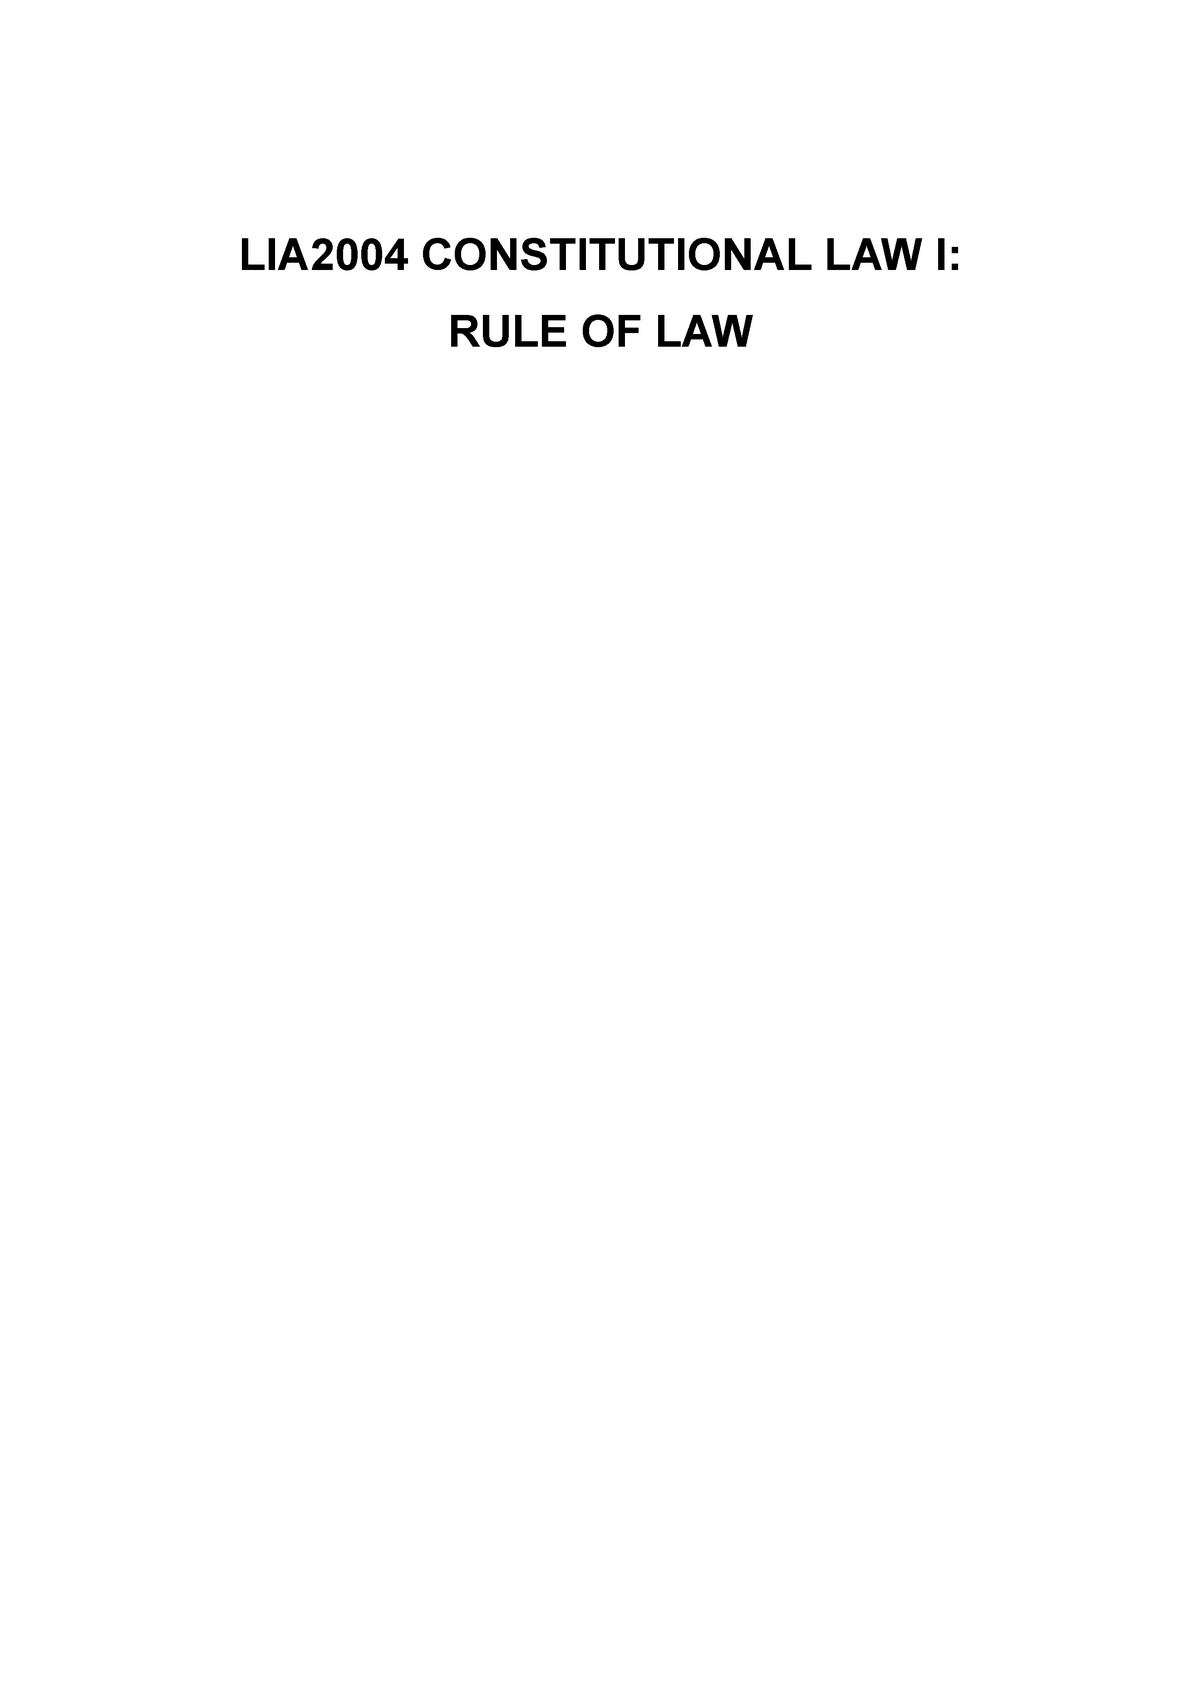 rule of law essay 200 words